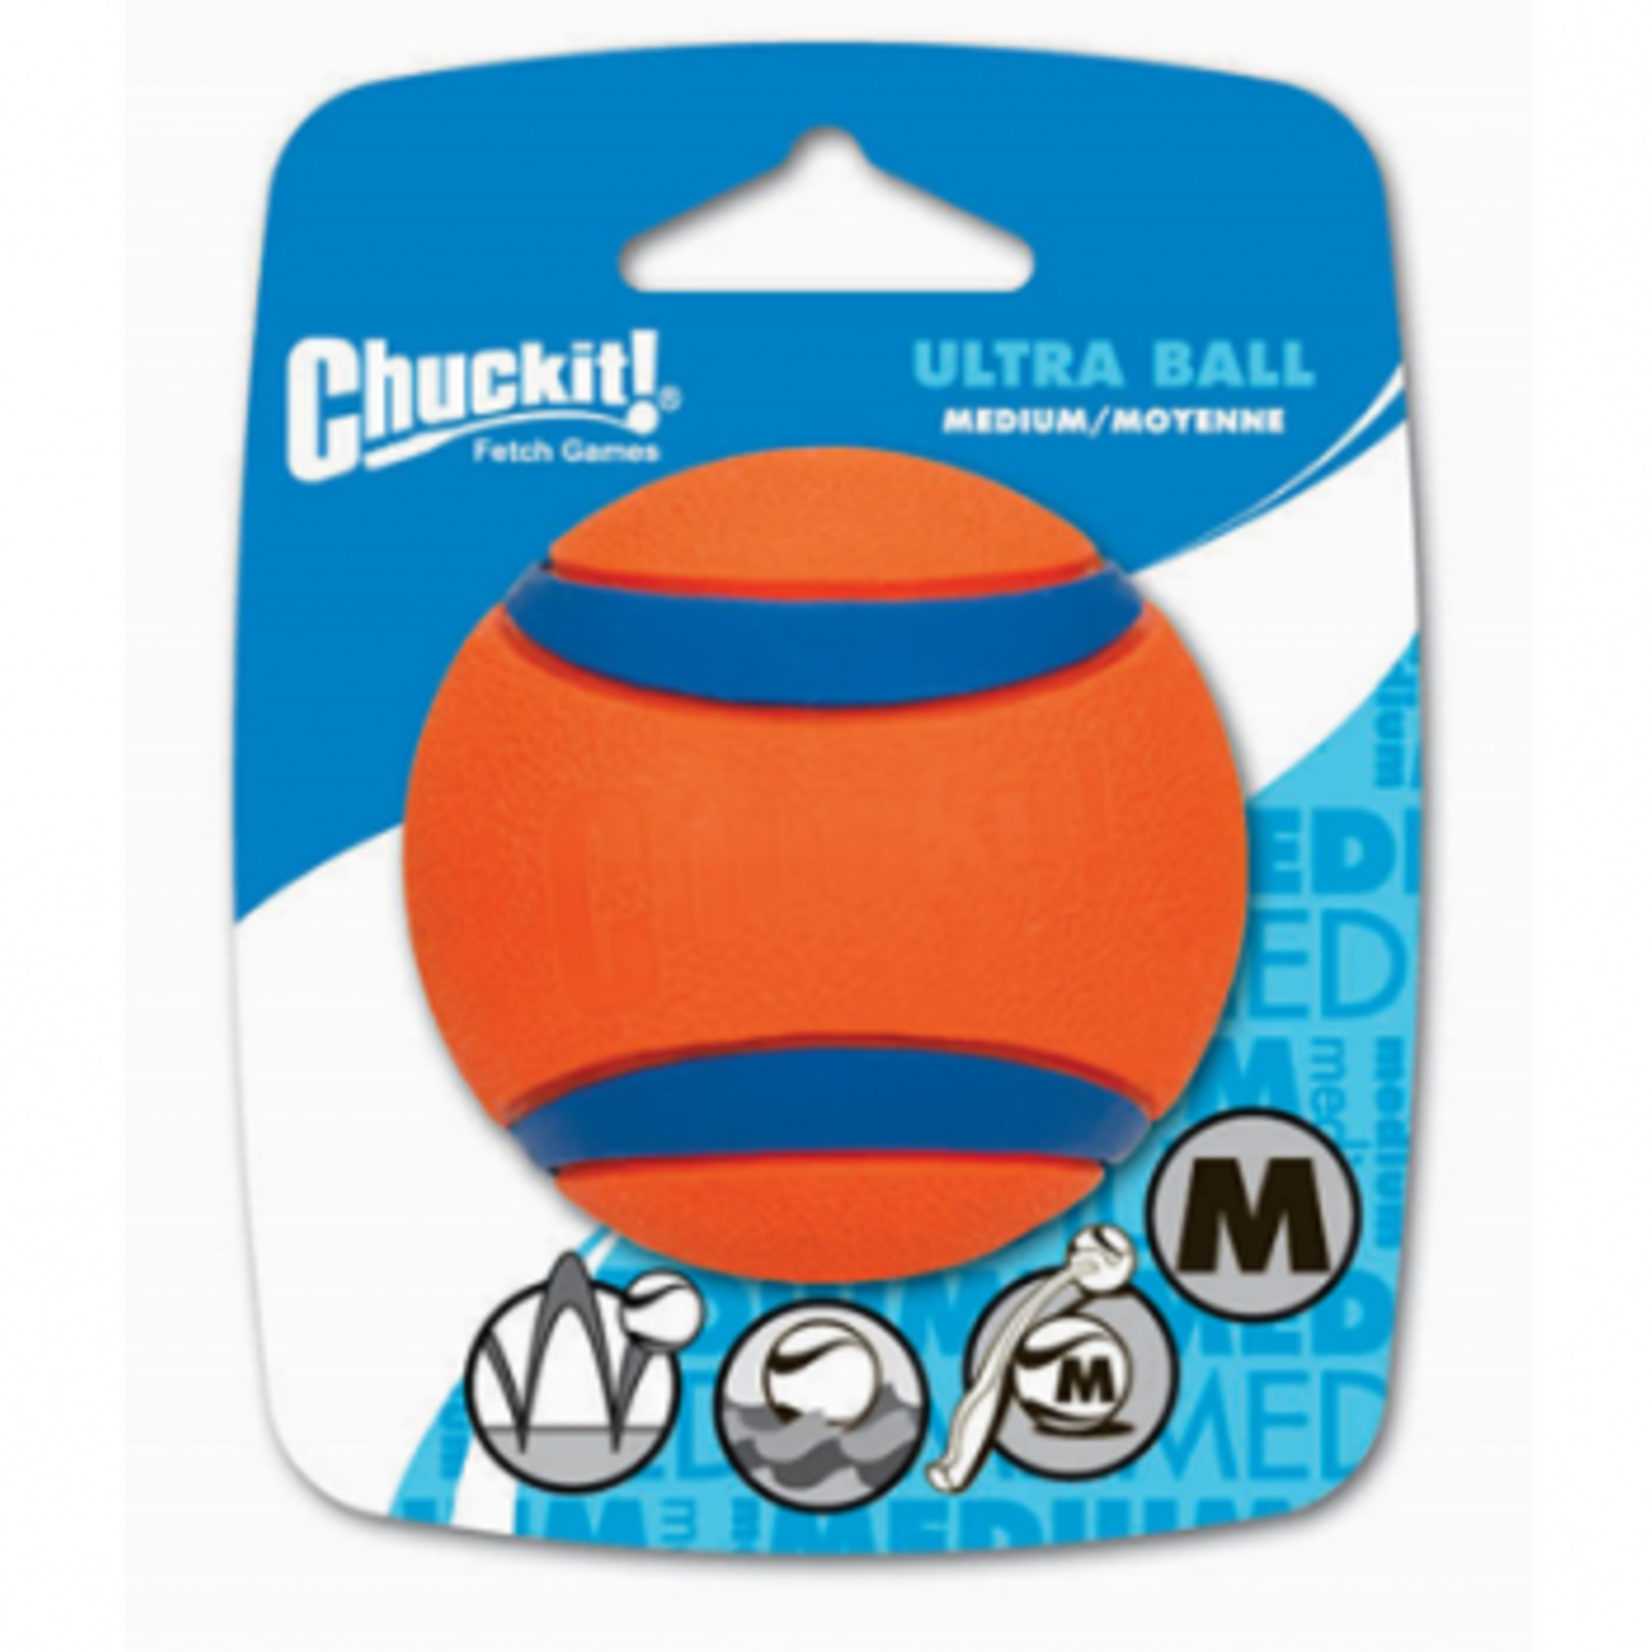 Chuck It! Ultra Ball - Medium